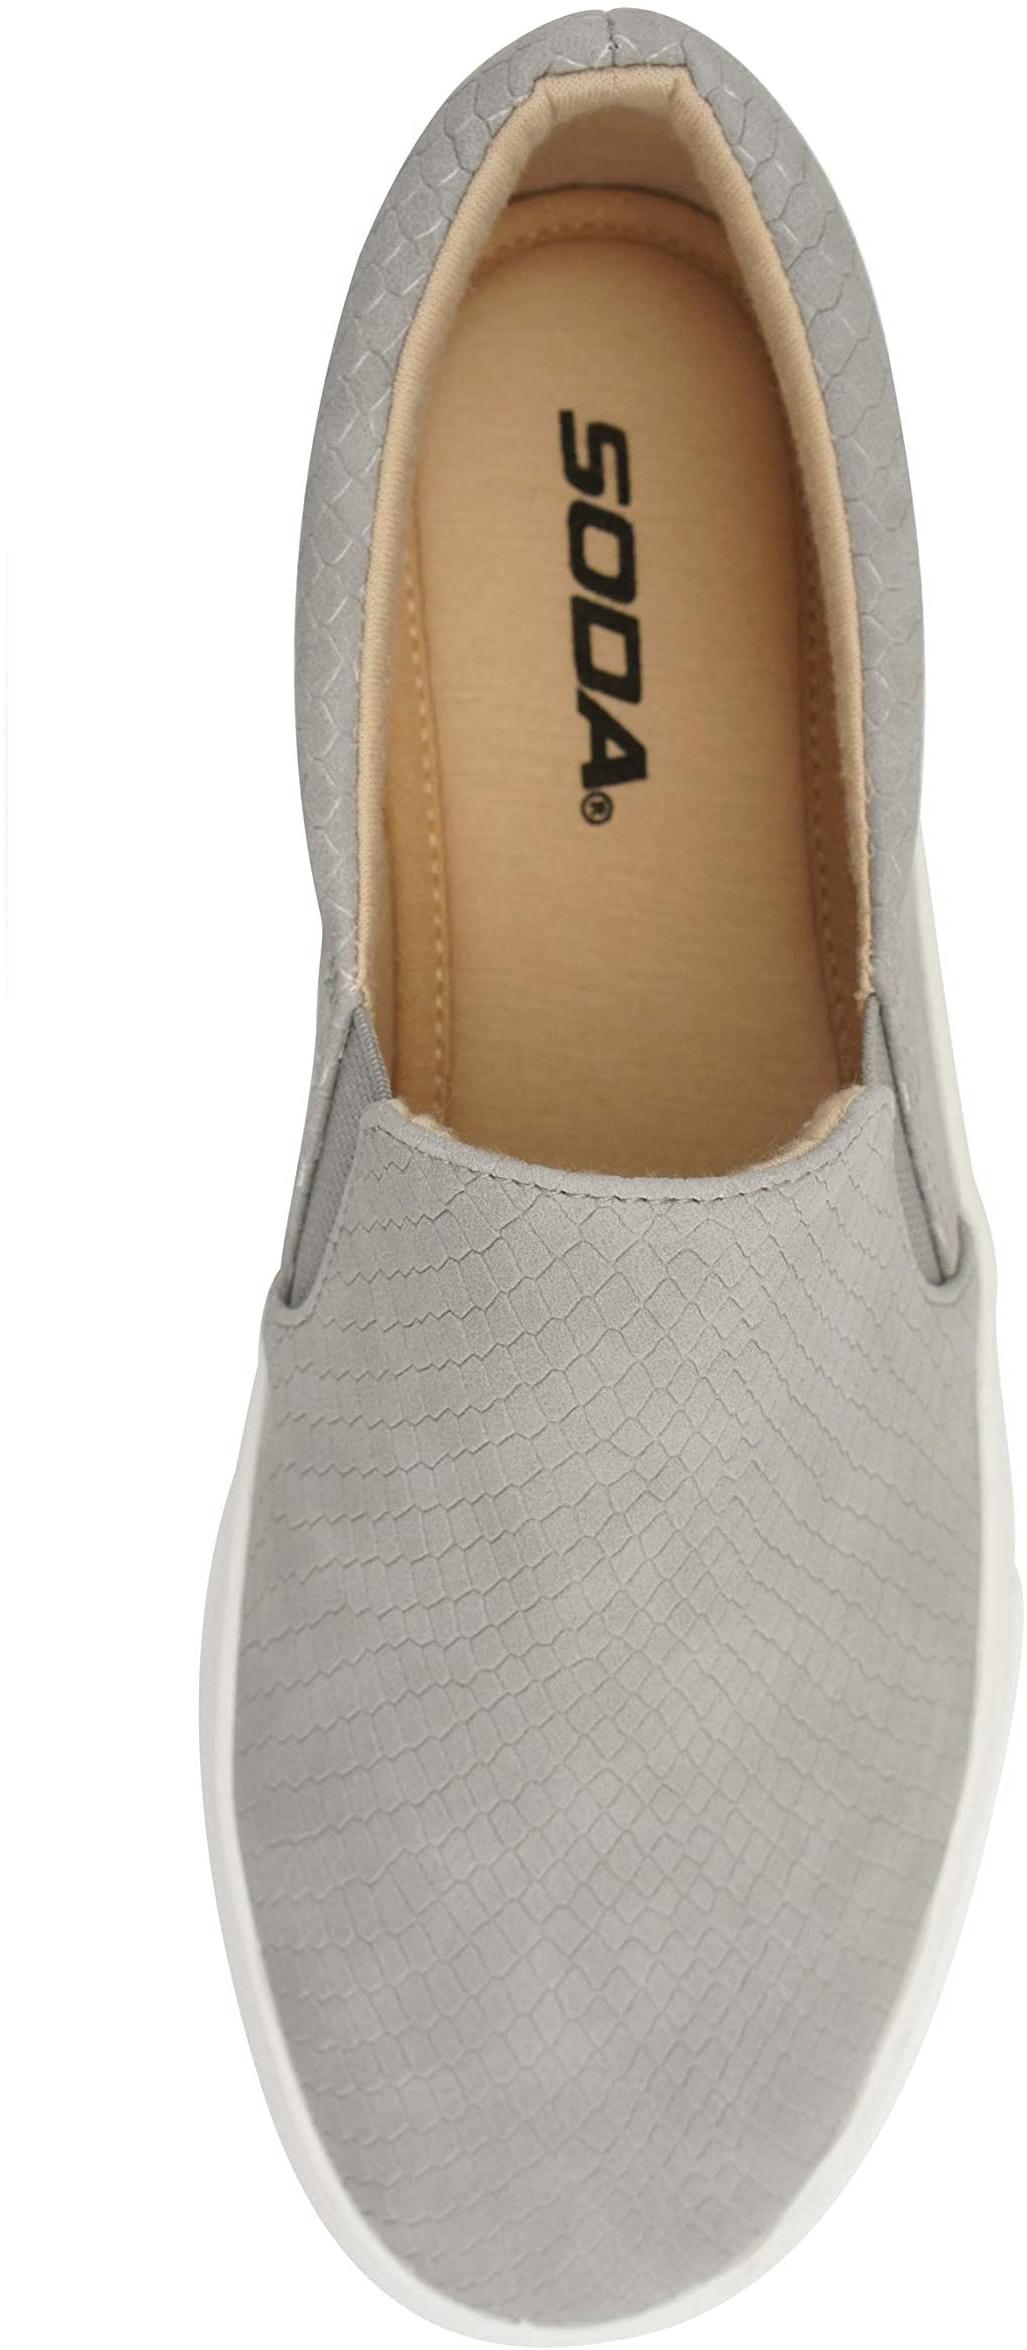 Soda Flat Women Shoes Slip On Loafers Casual Sneakers Memory Foam Insoles Hidden Platform / Flatform Round Toe HIKE-G PU Gray Cobra Snake 9 - image 3 of 5